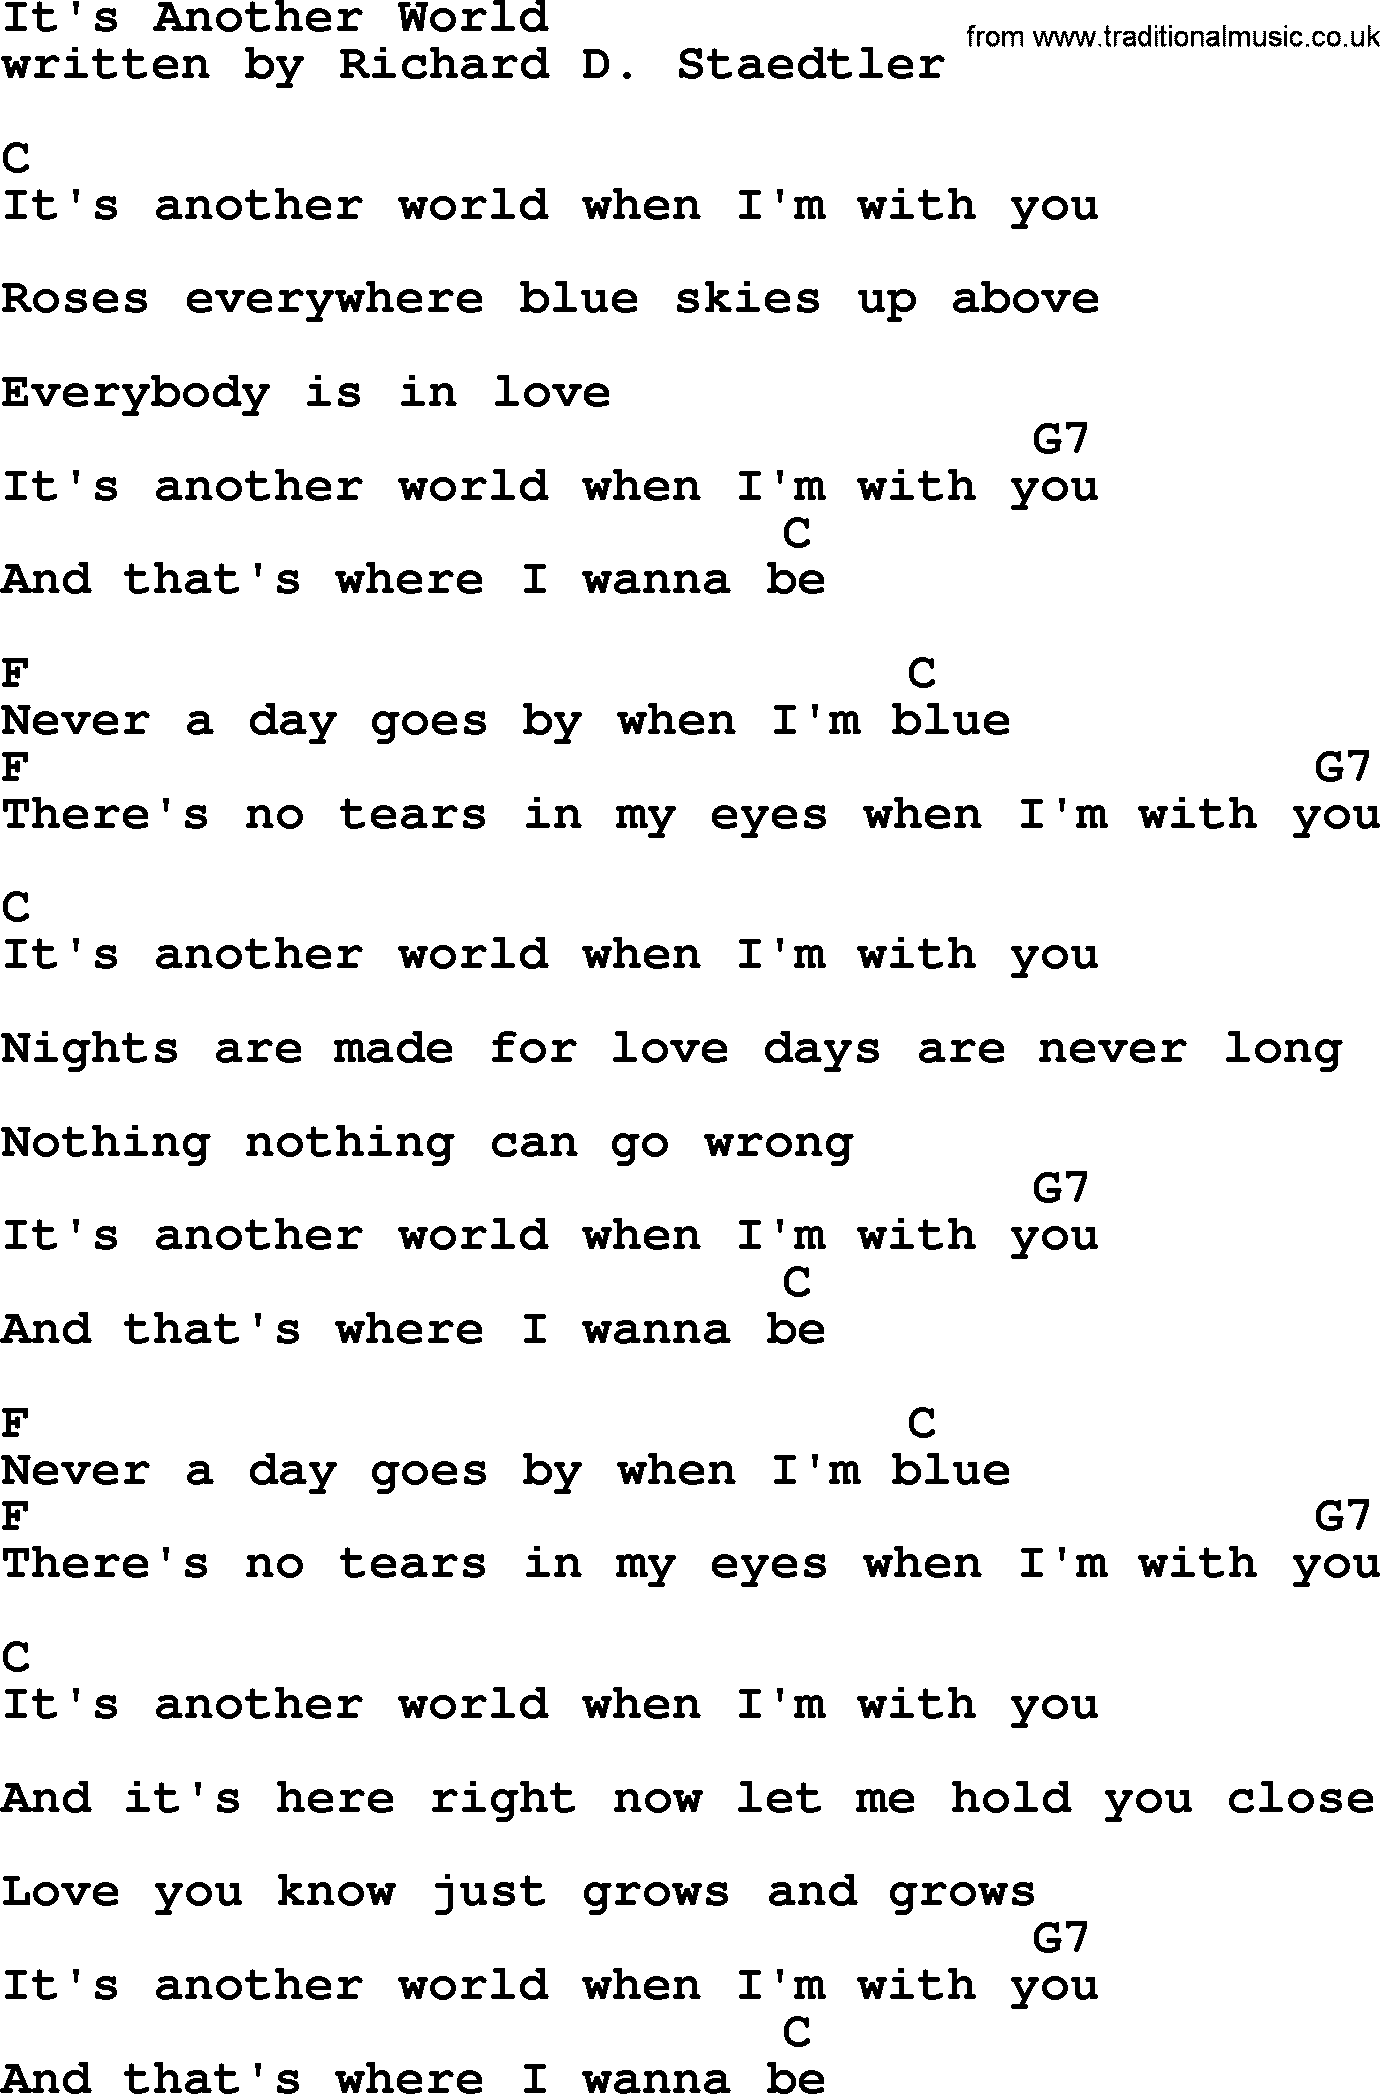 Loretta Lynn song: It's Another World lyrics and chords